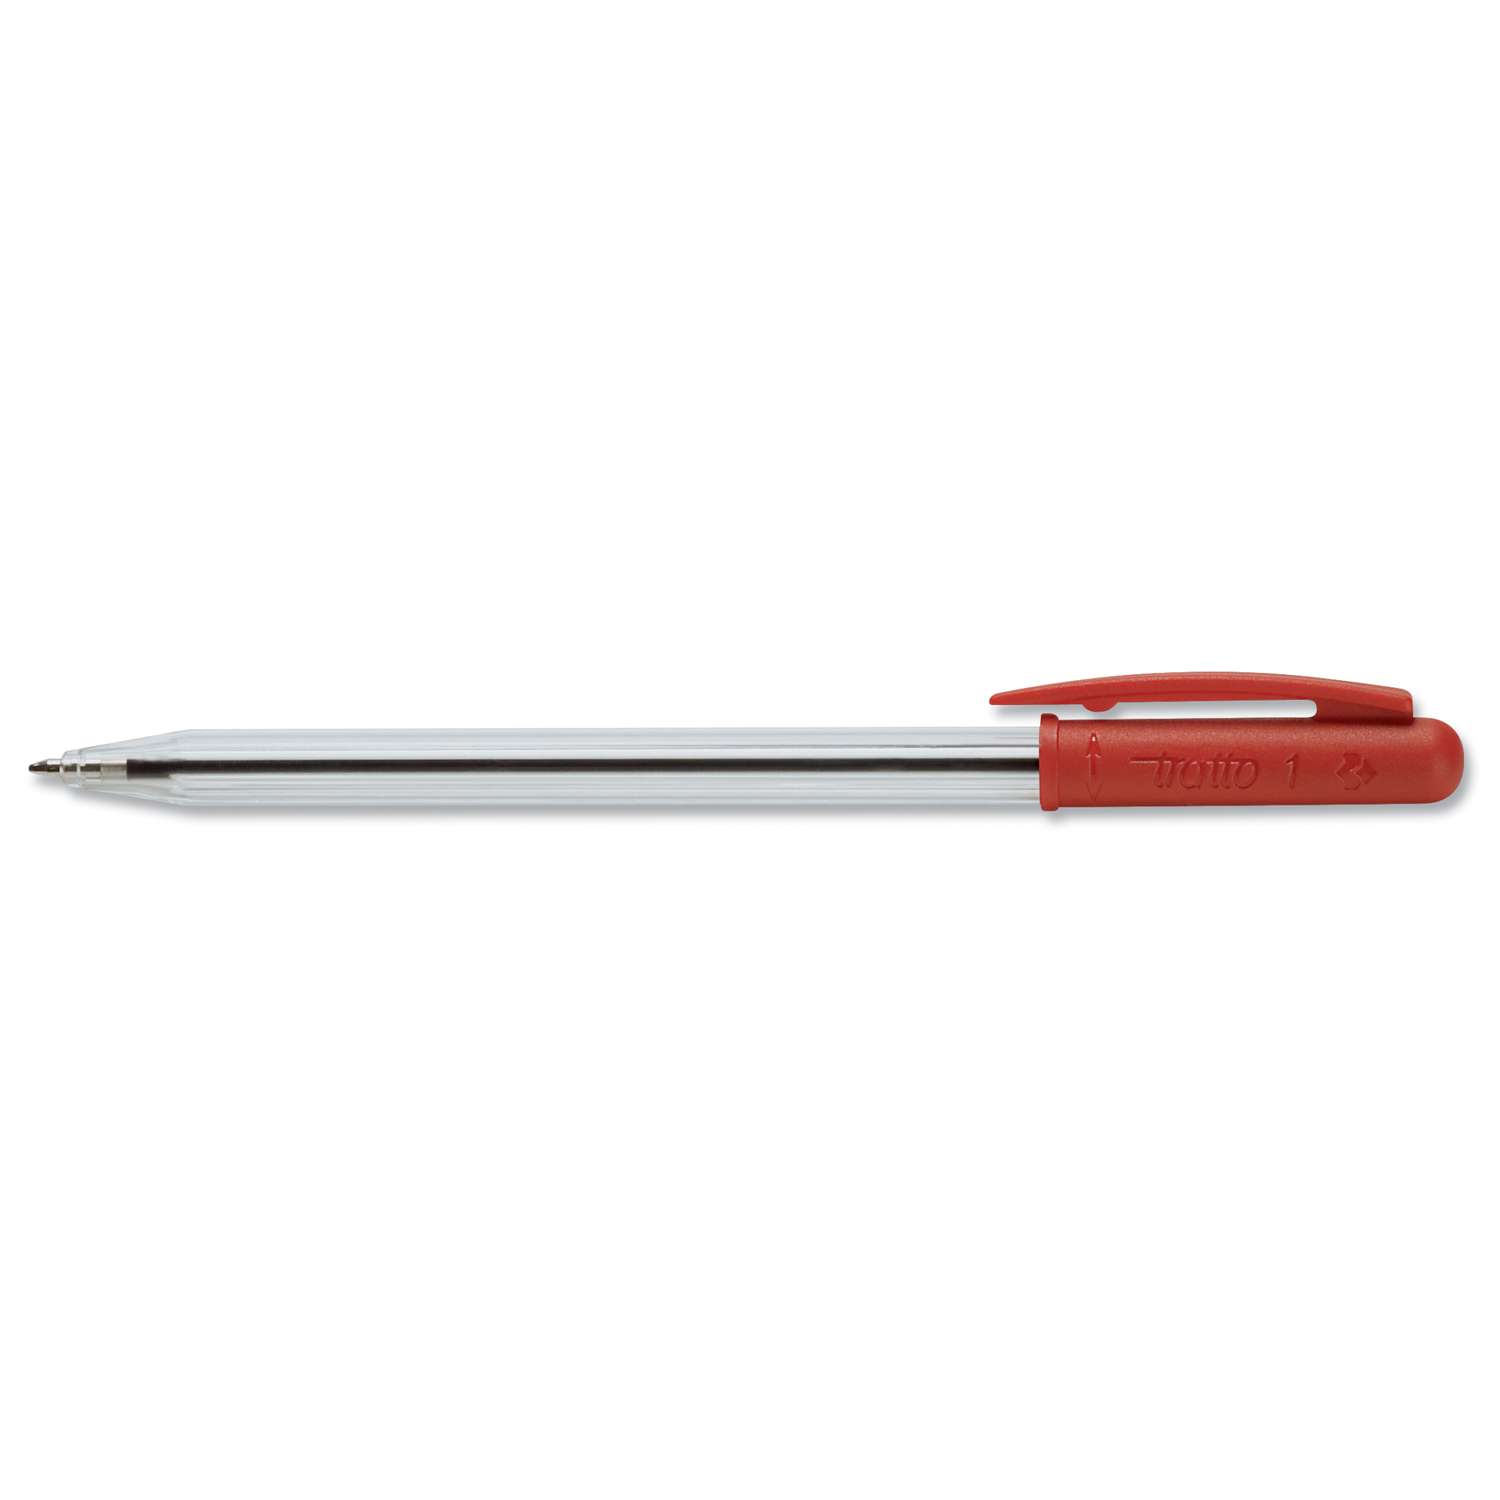 Tratto 1 Disposable Ballpoint Pens, 50,000+ Art Supplies